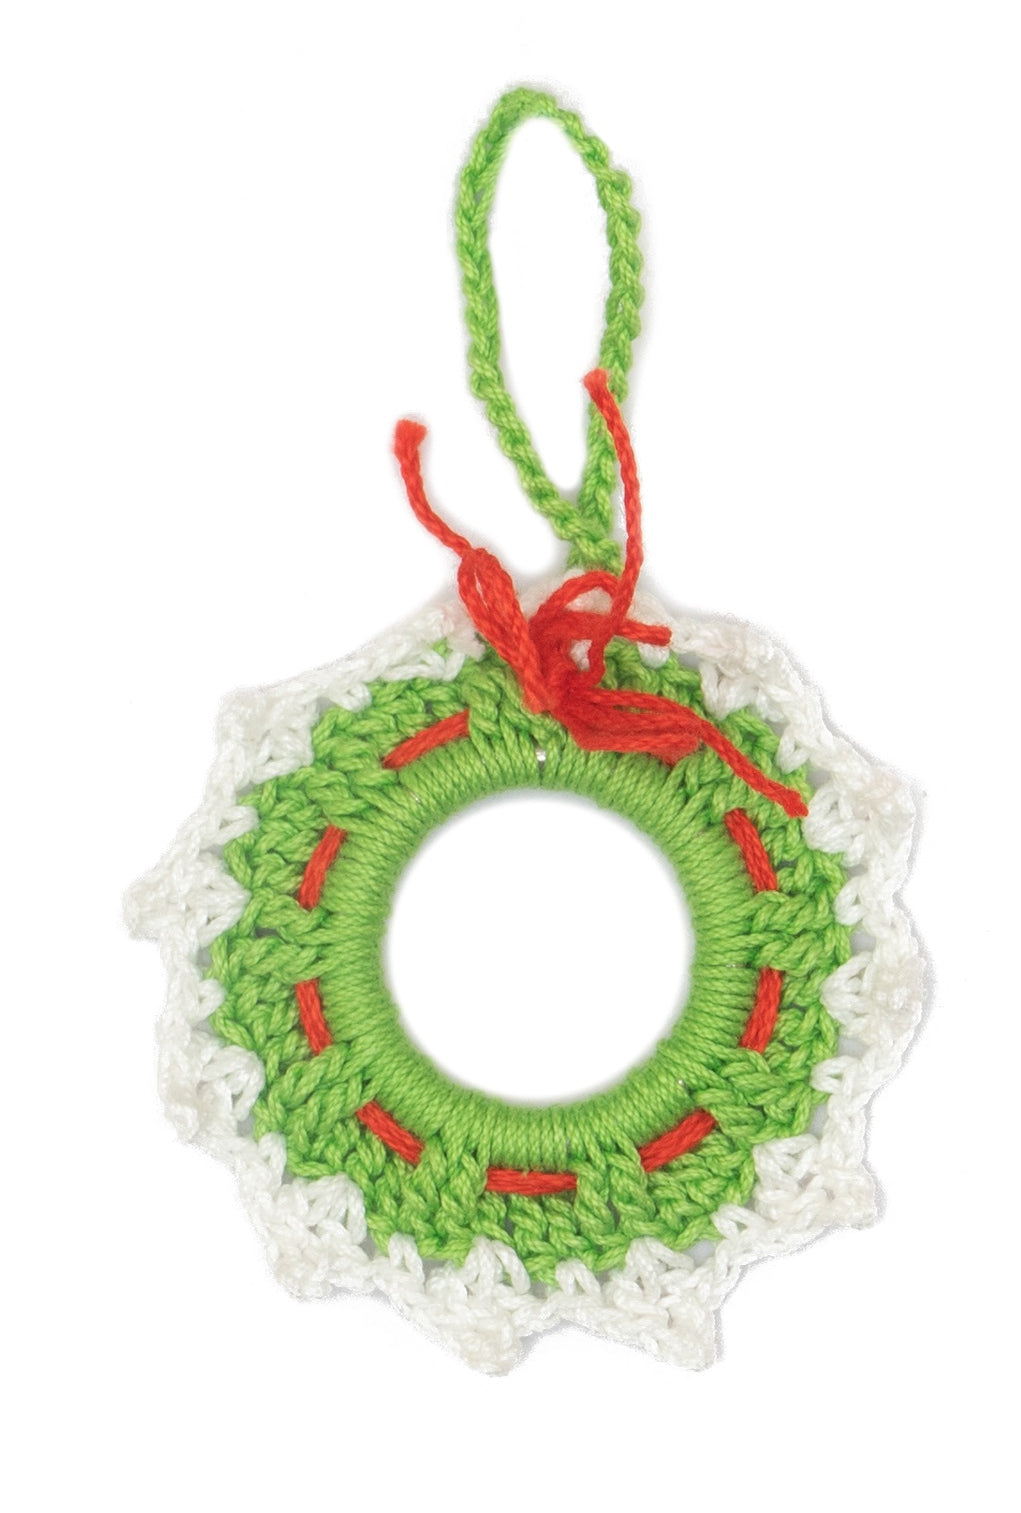 Handcrafted Crochet Christmas Tree Ornament- Wreath